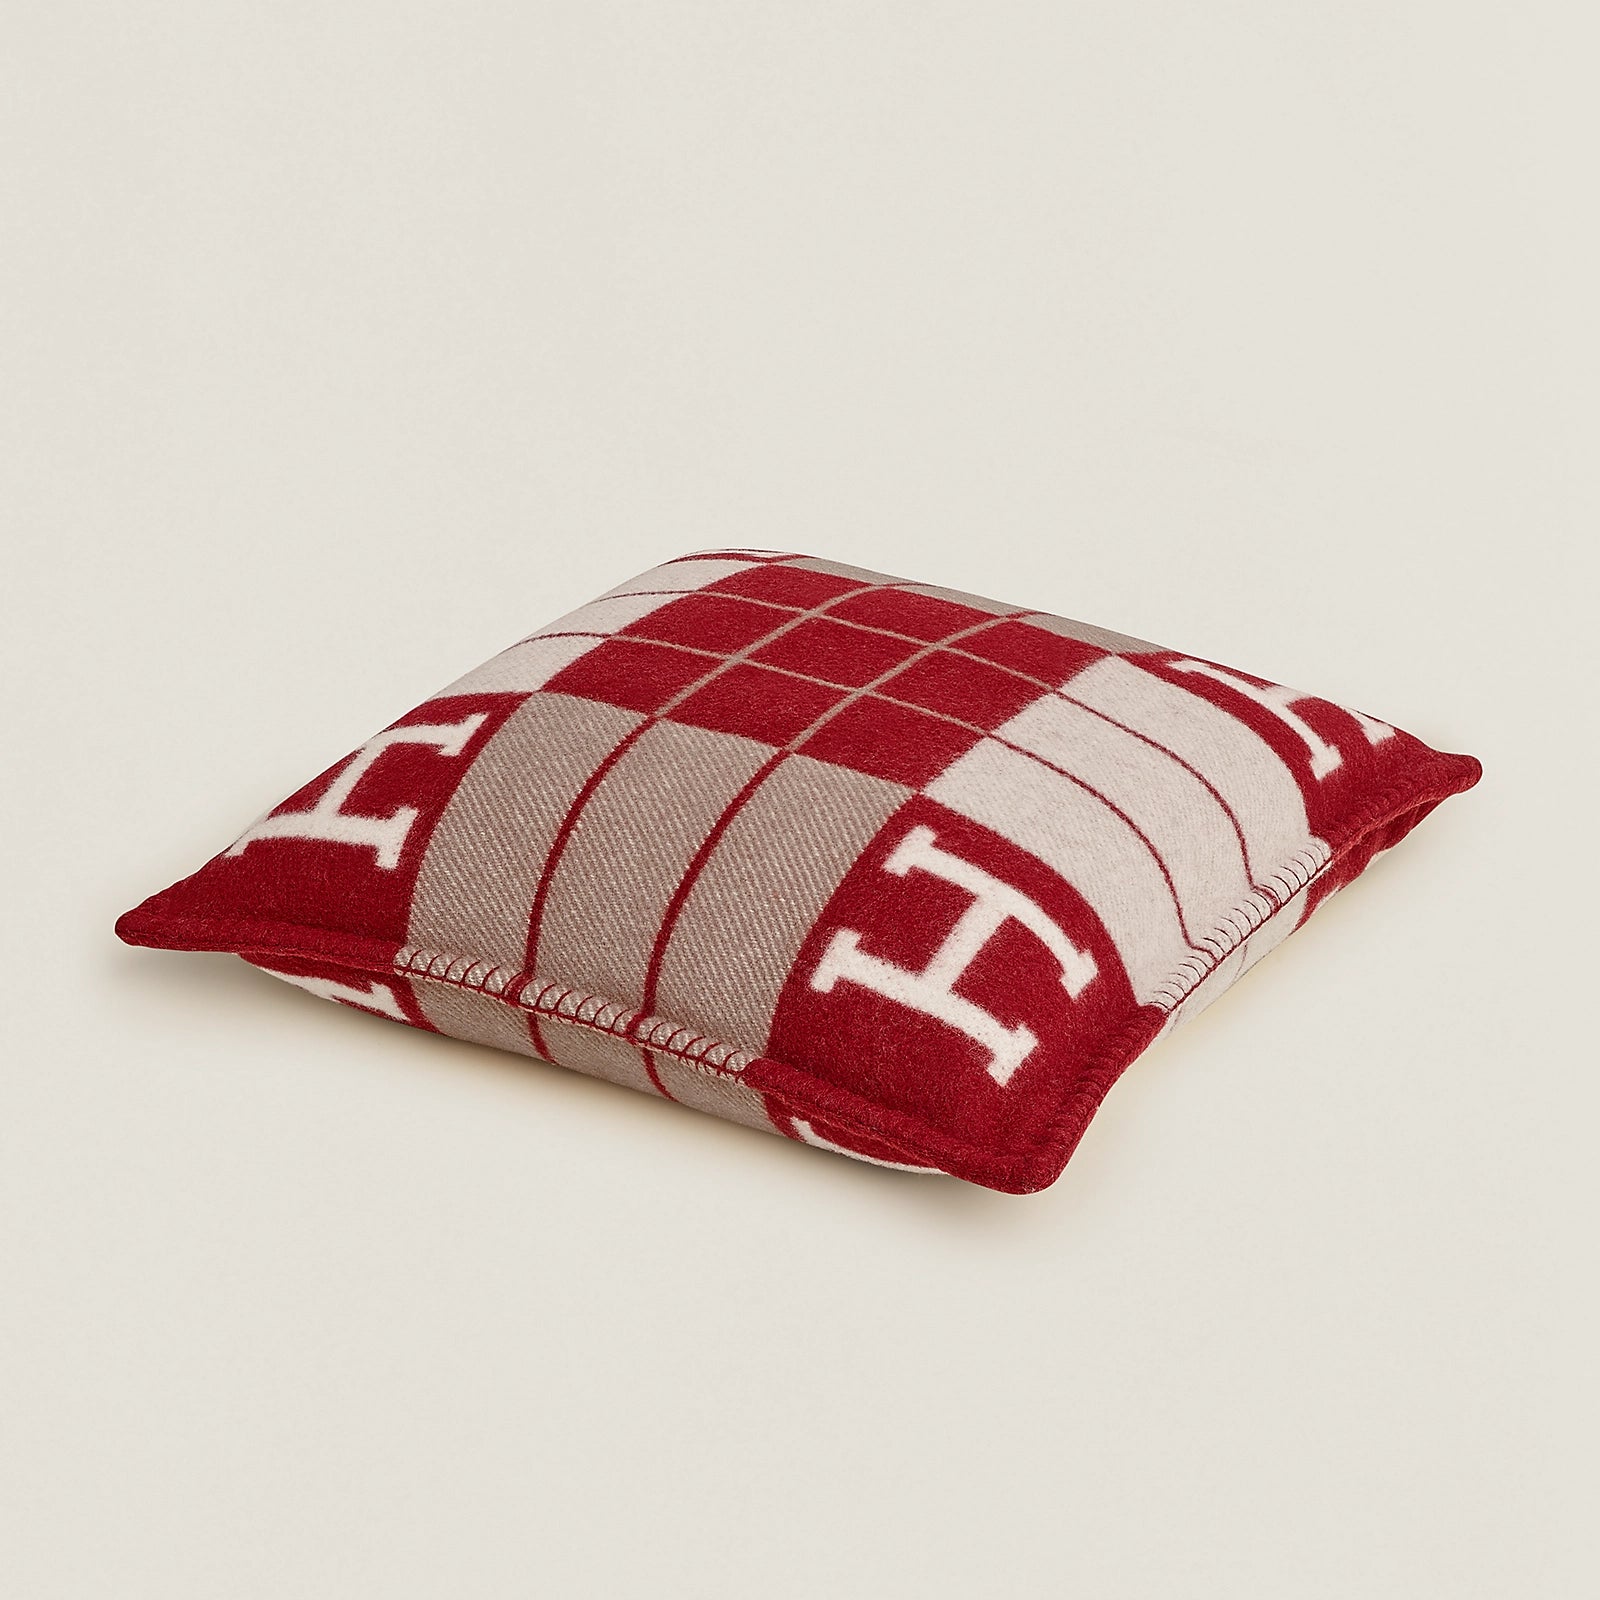 Hermès - Avalon III pillow, small model